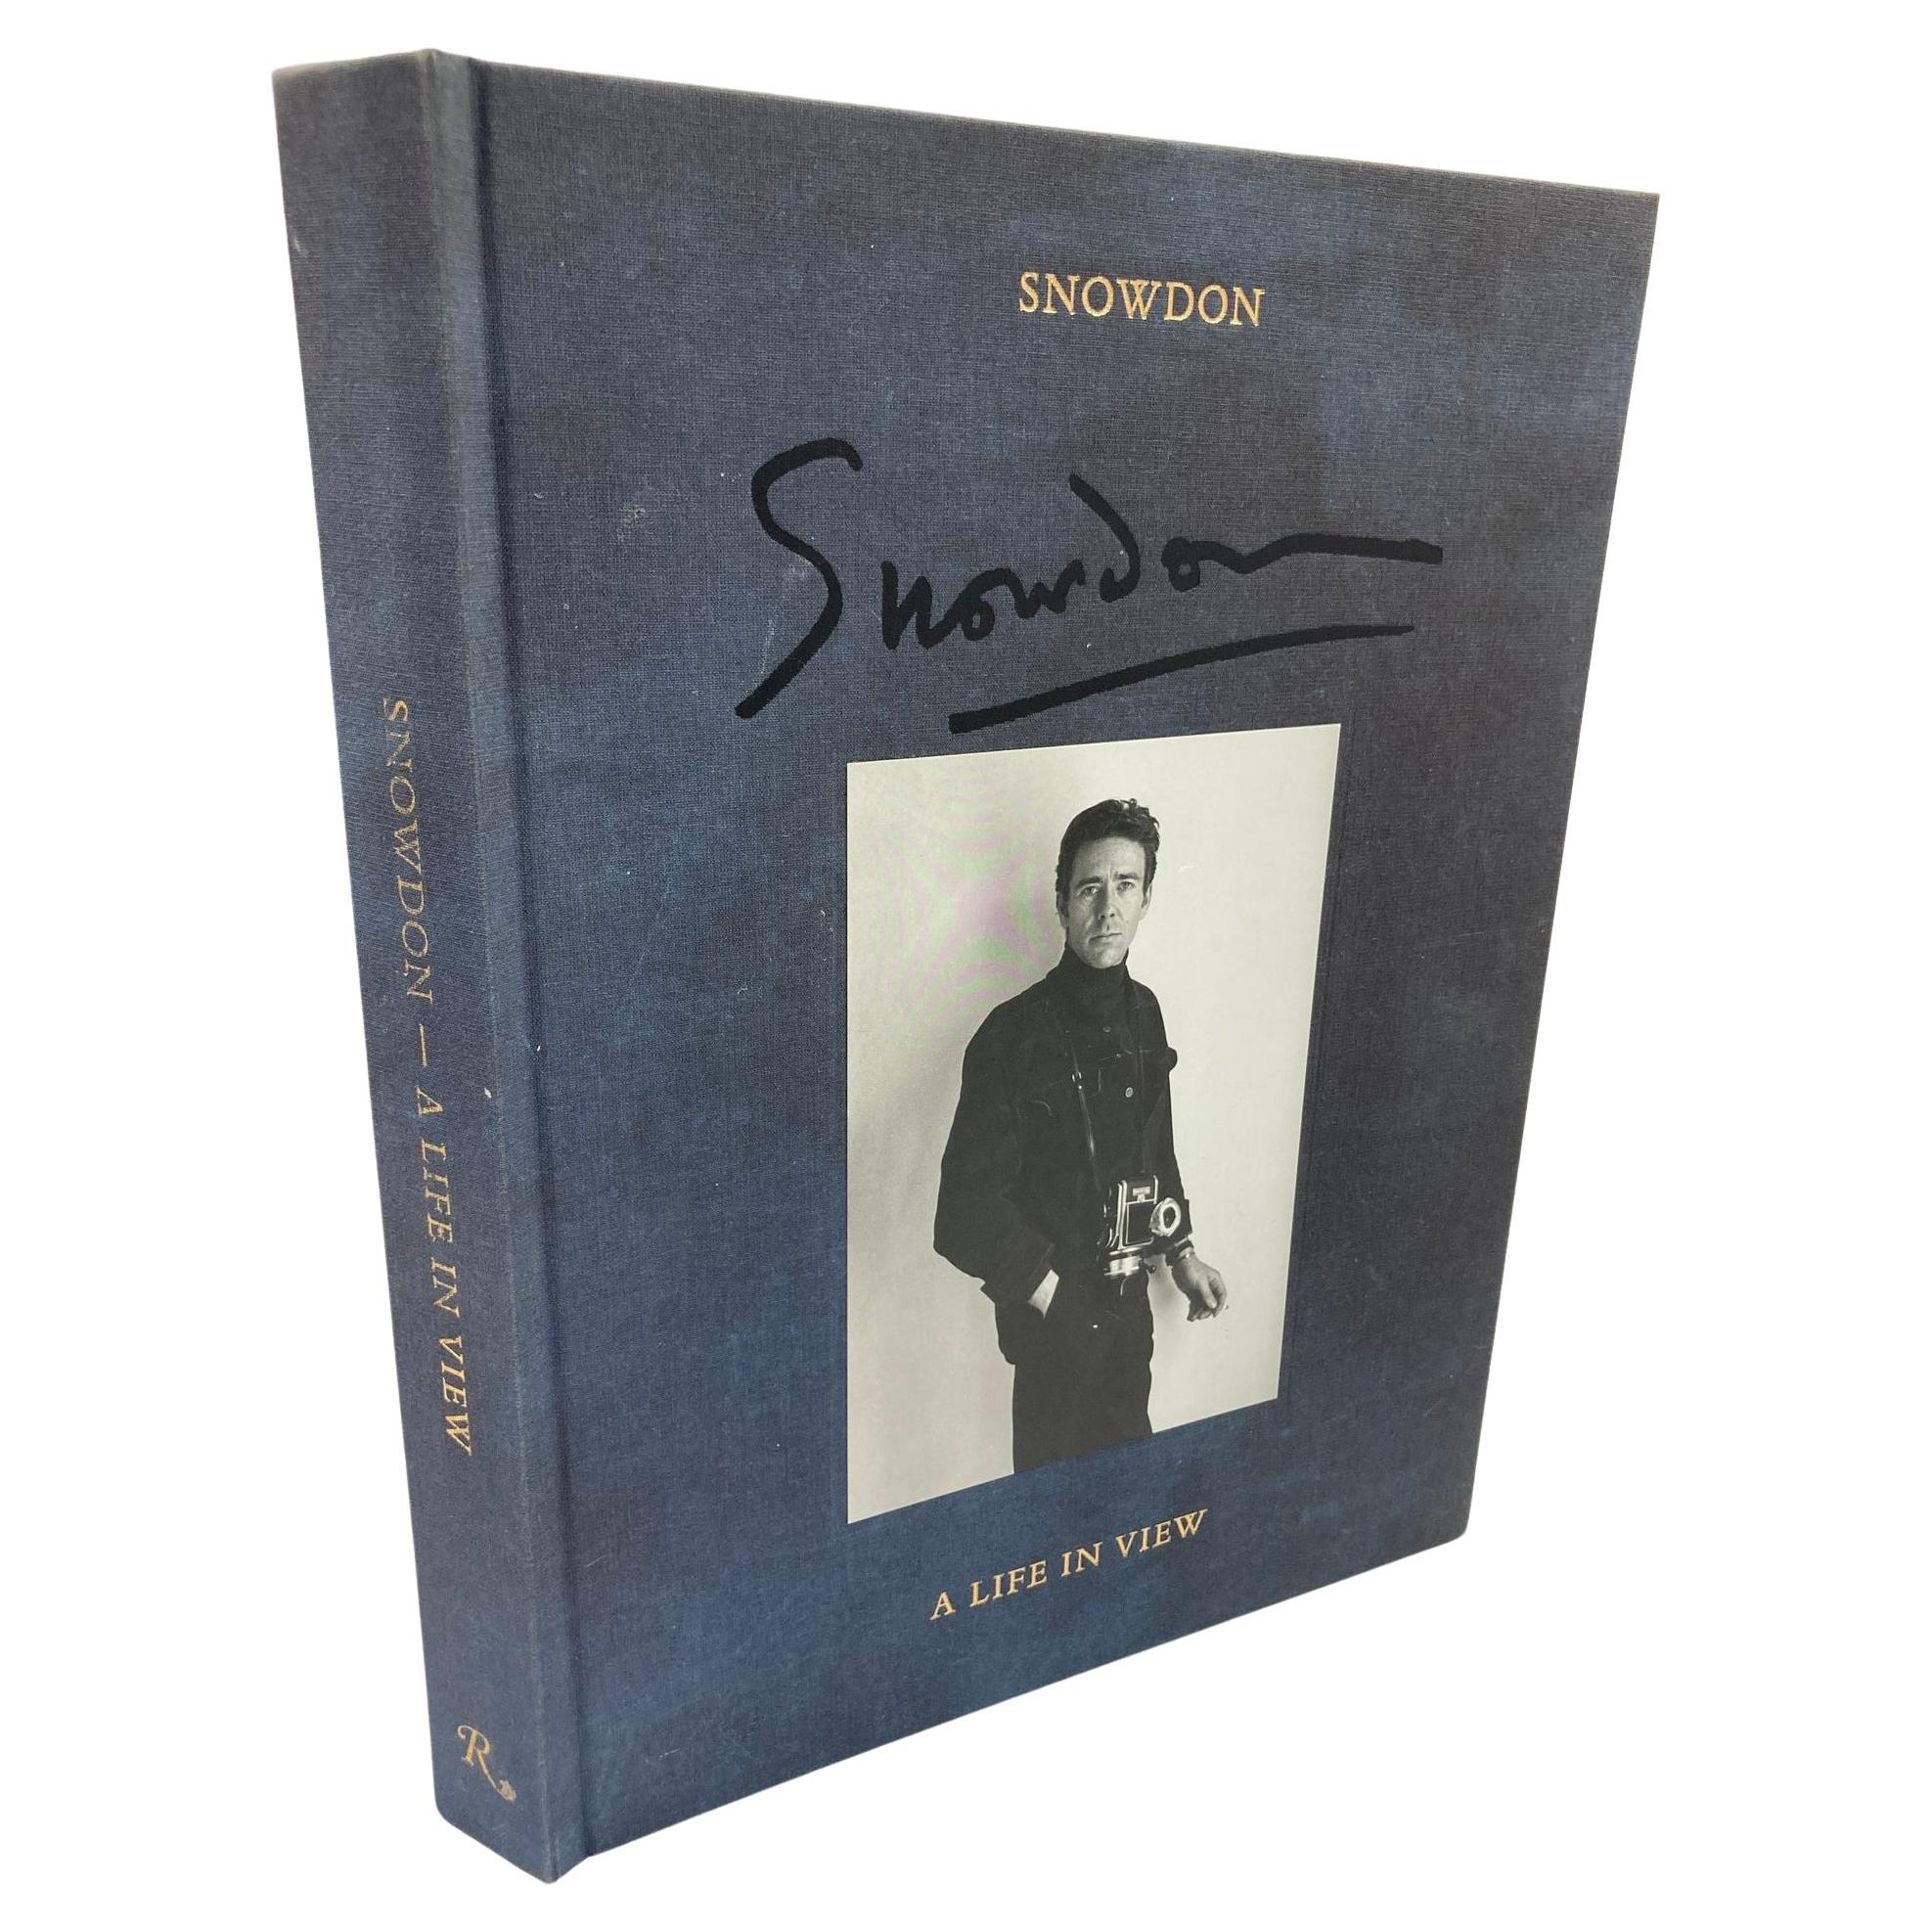 Snowdon: A Life in View, couverture rigide illustrée par Antony Armstrong Jones 2014 en vente